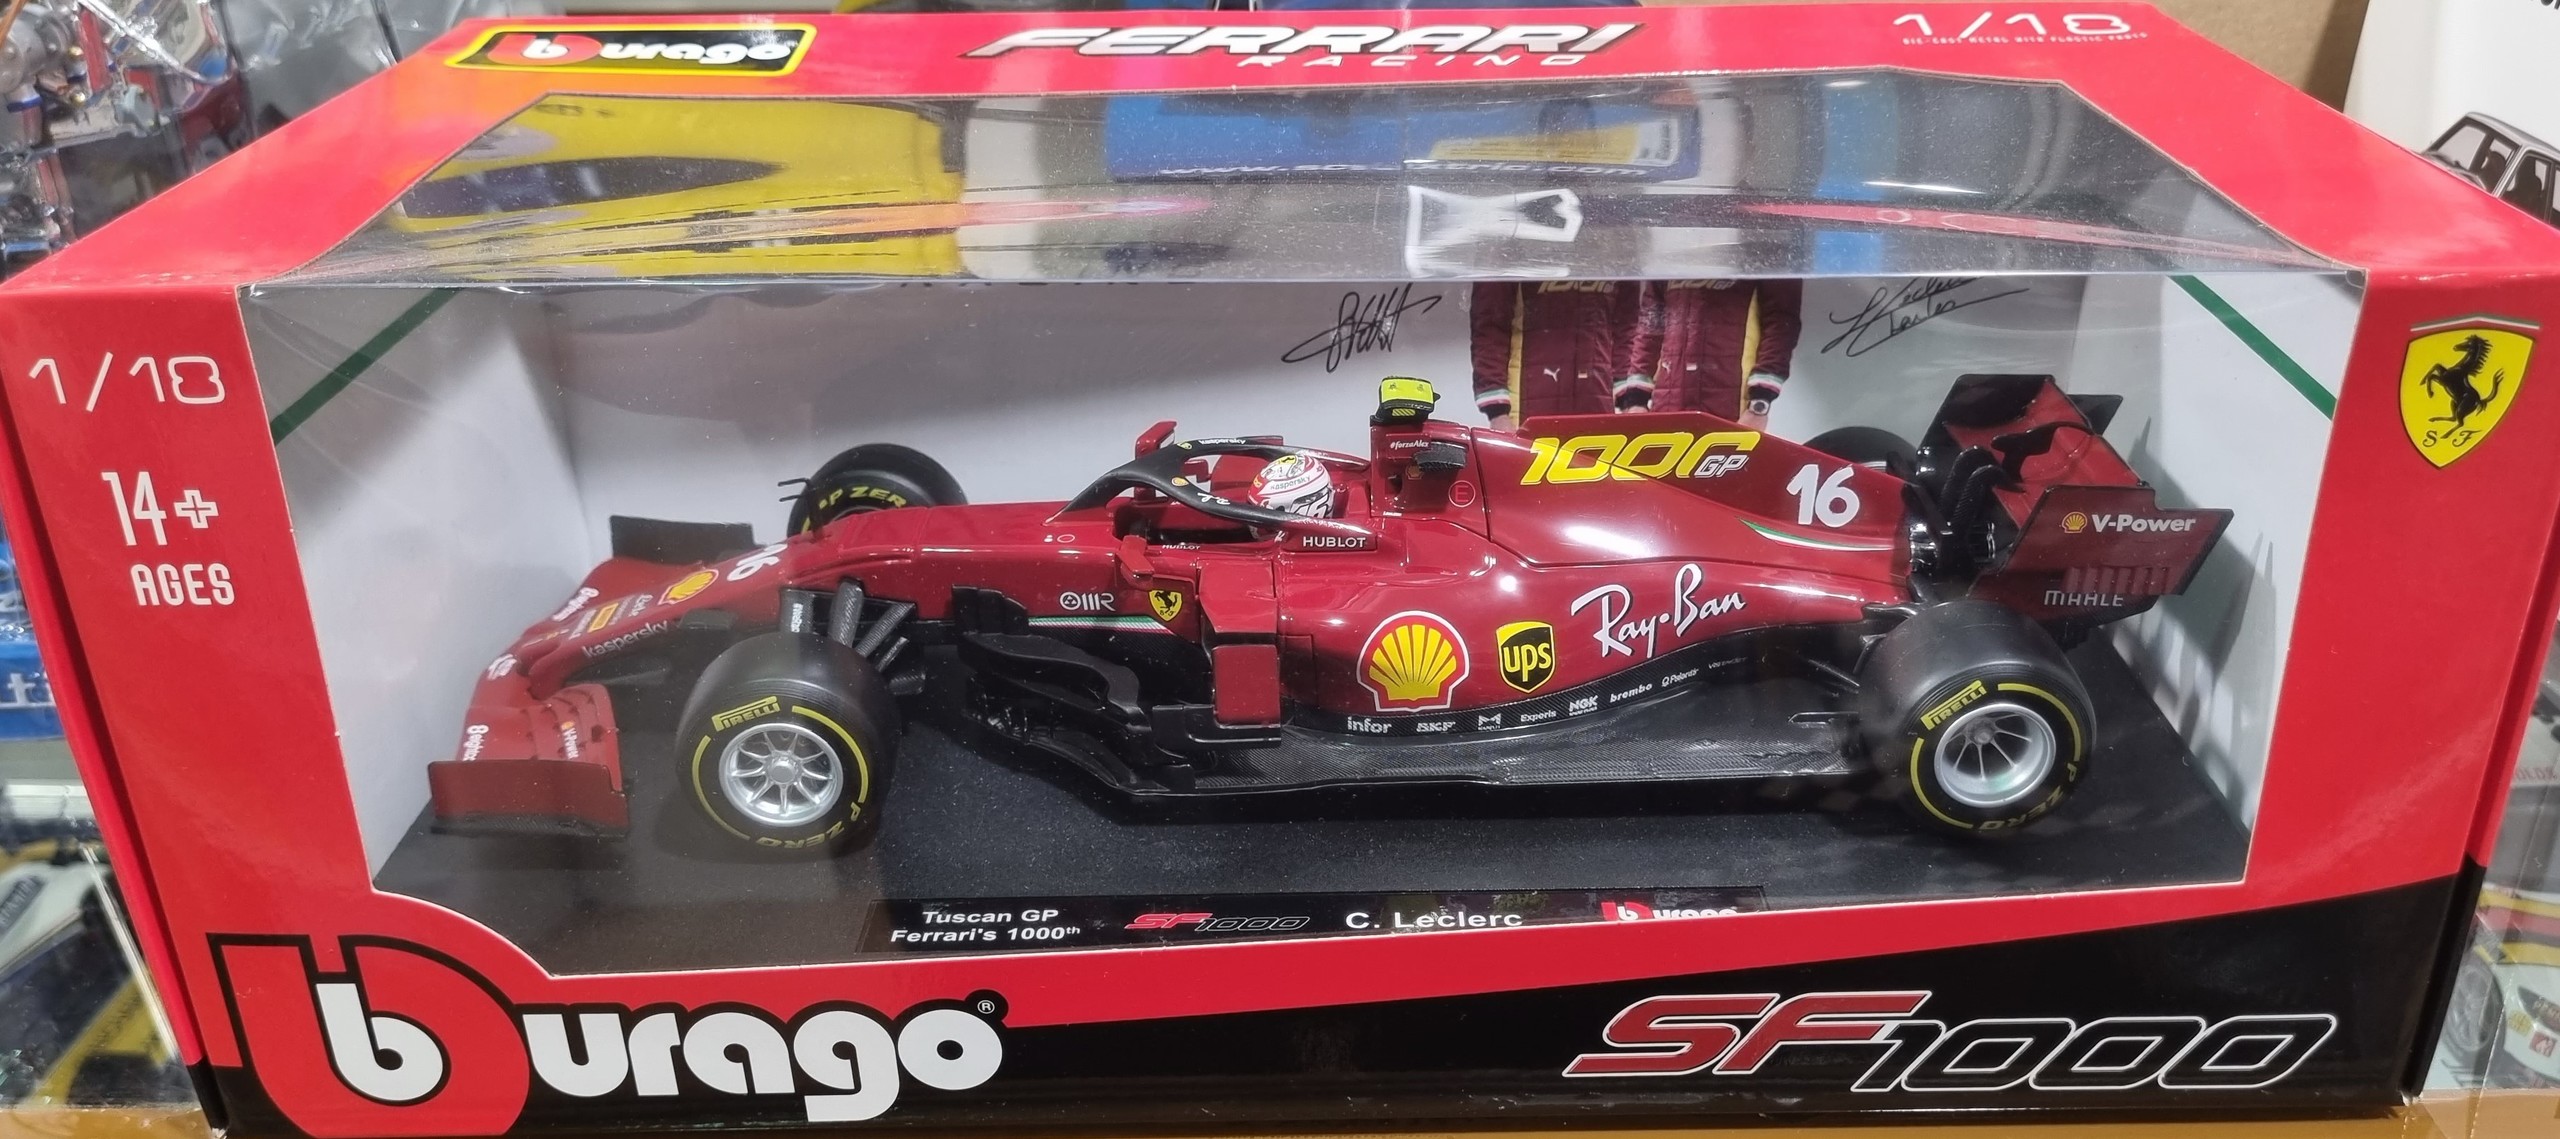 Ferrari SF1000 2020 Tuskan F1 GP Charles LeClerc Burago 1/18